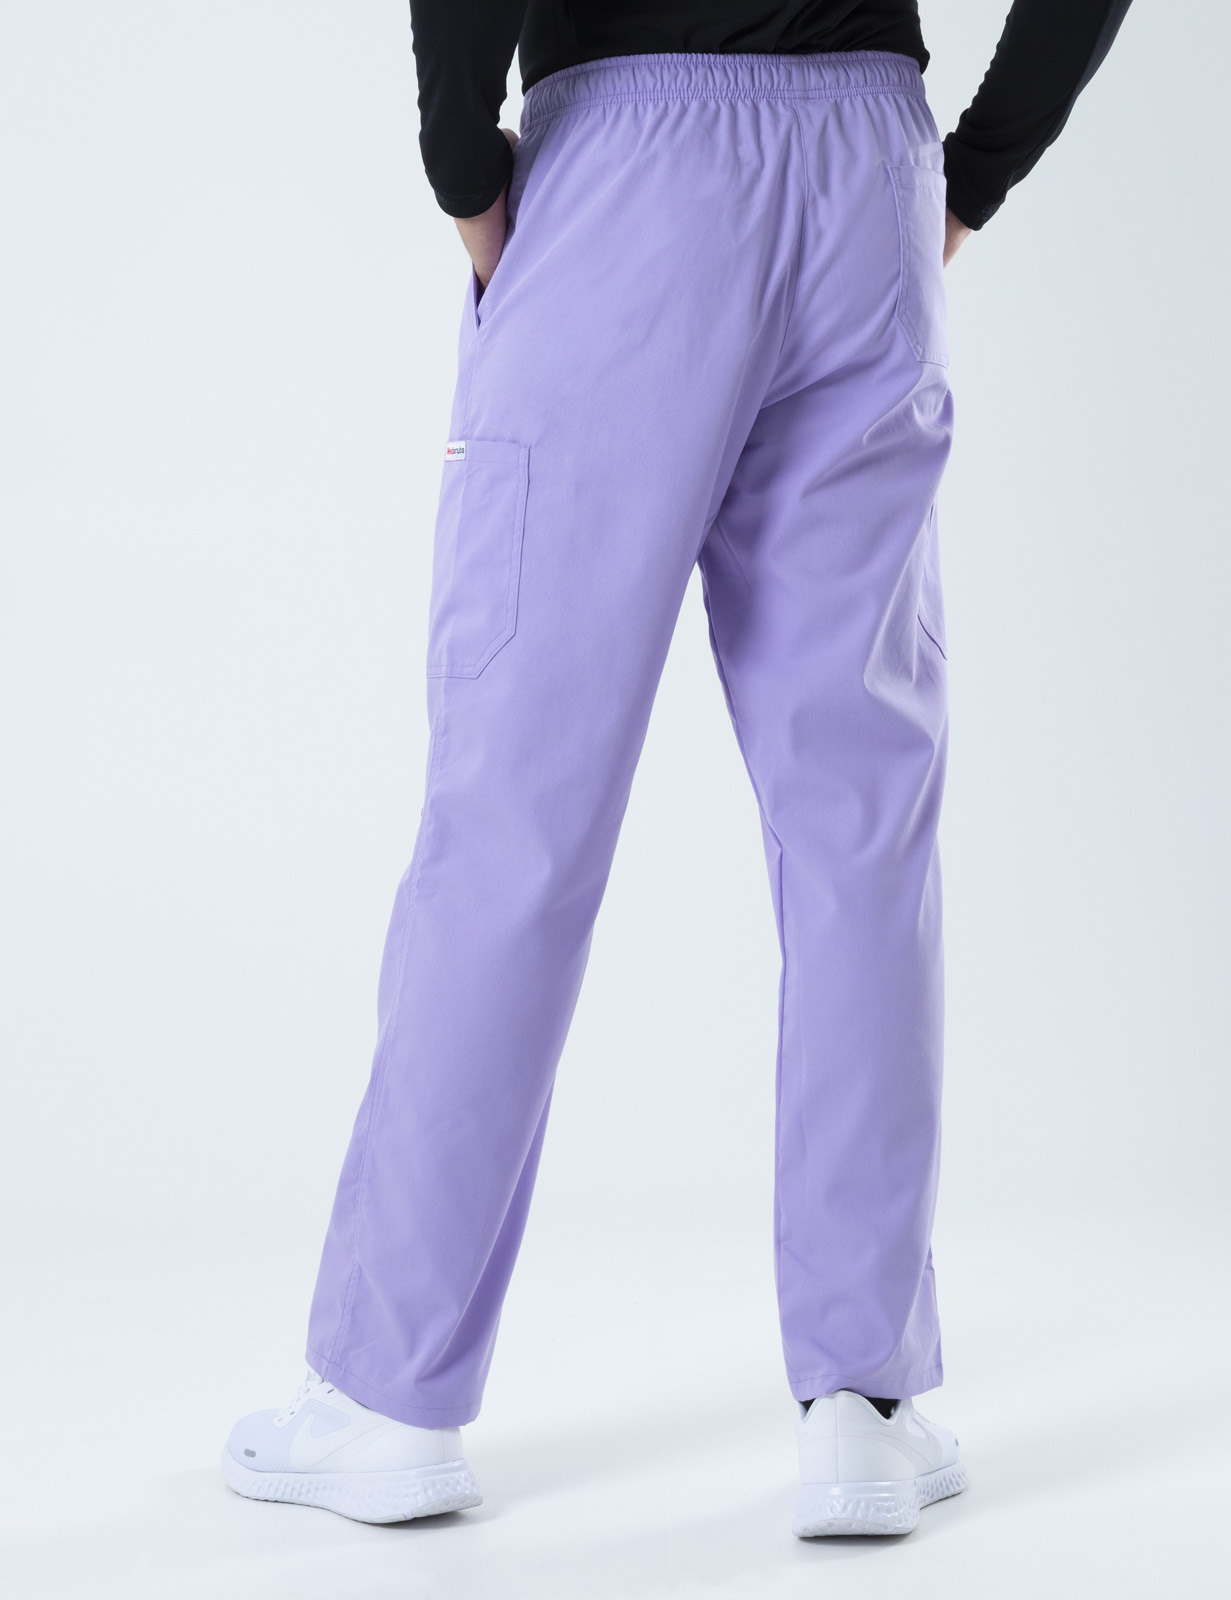 Men's Cargo Performance Pants - Lilac - 4X large